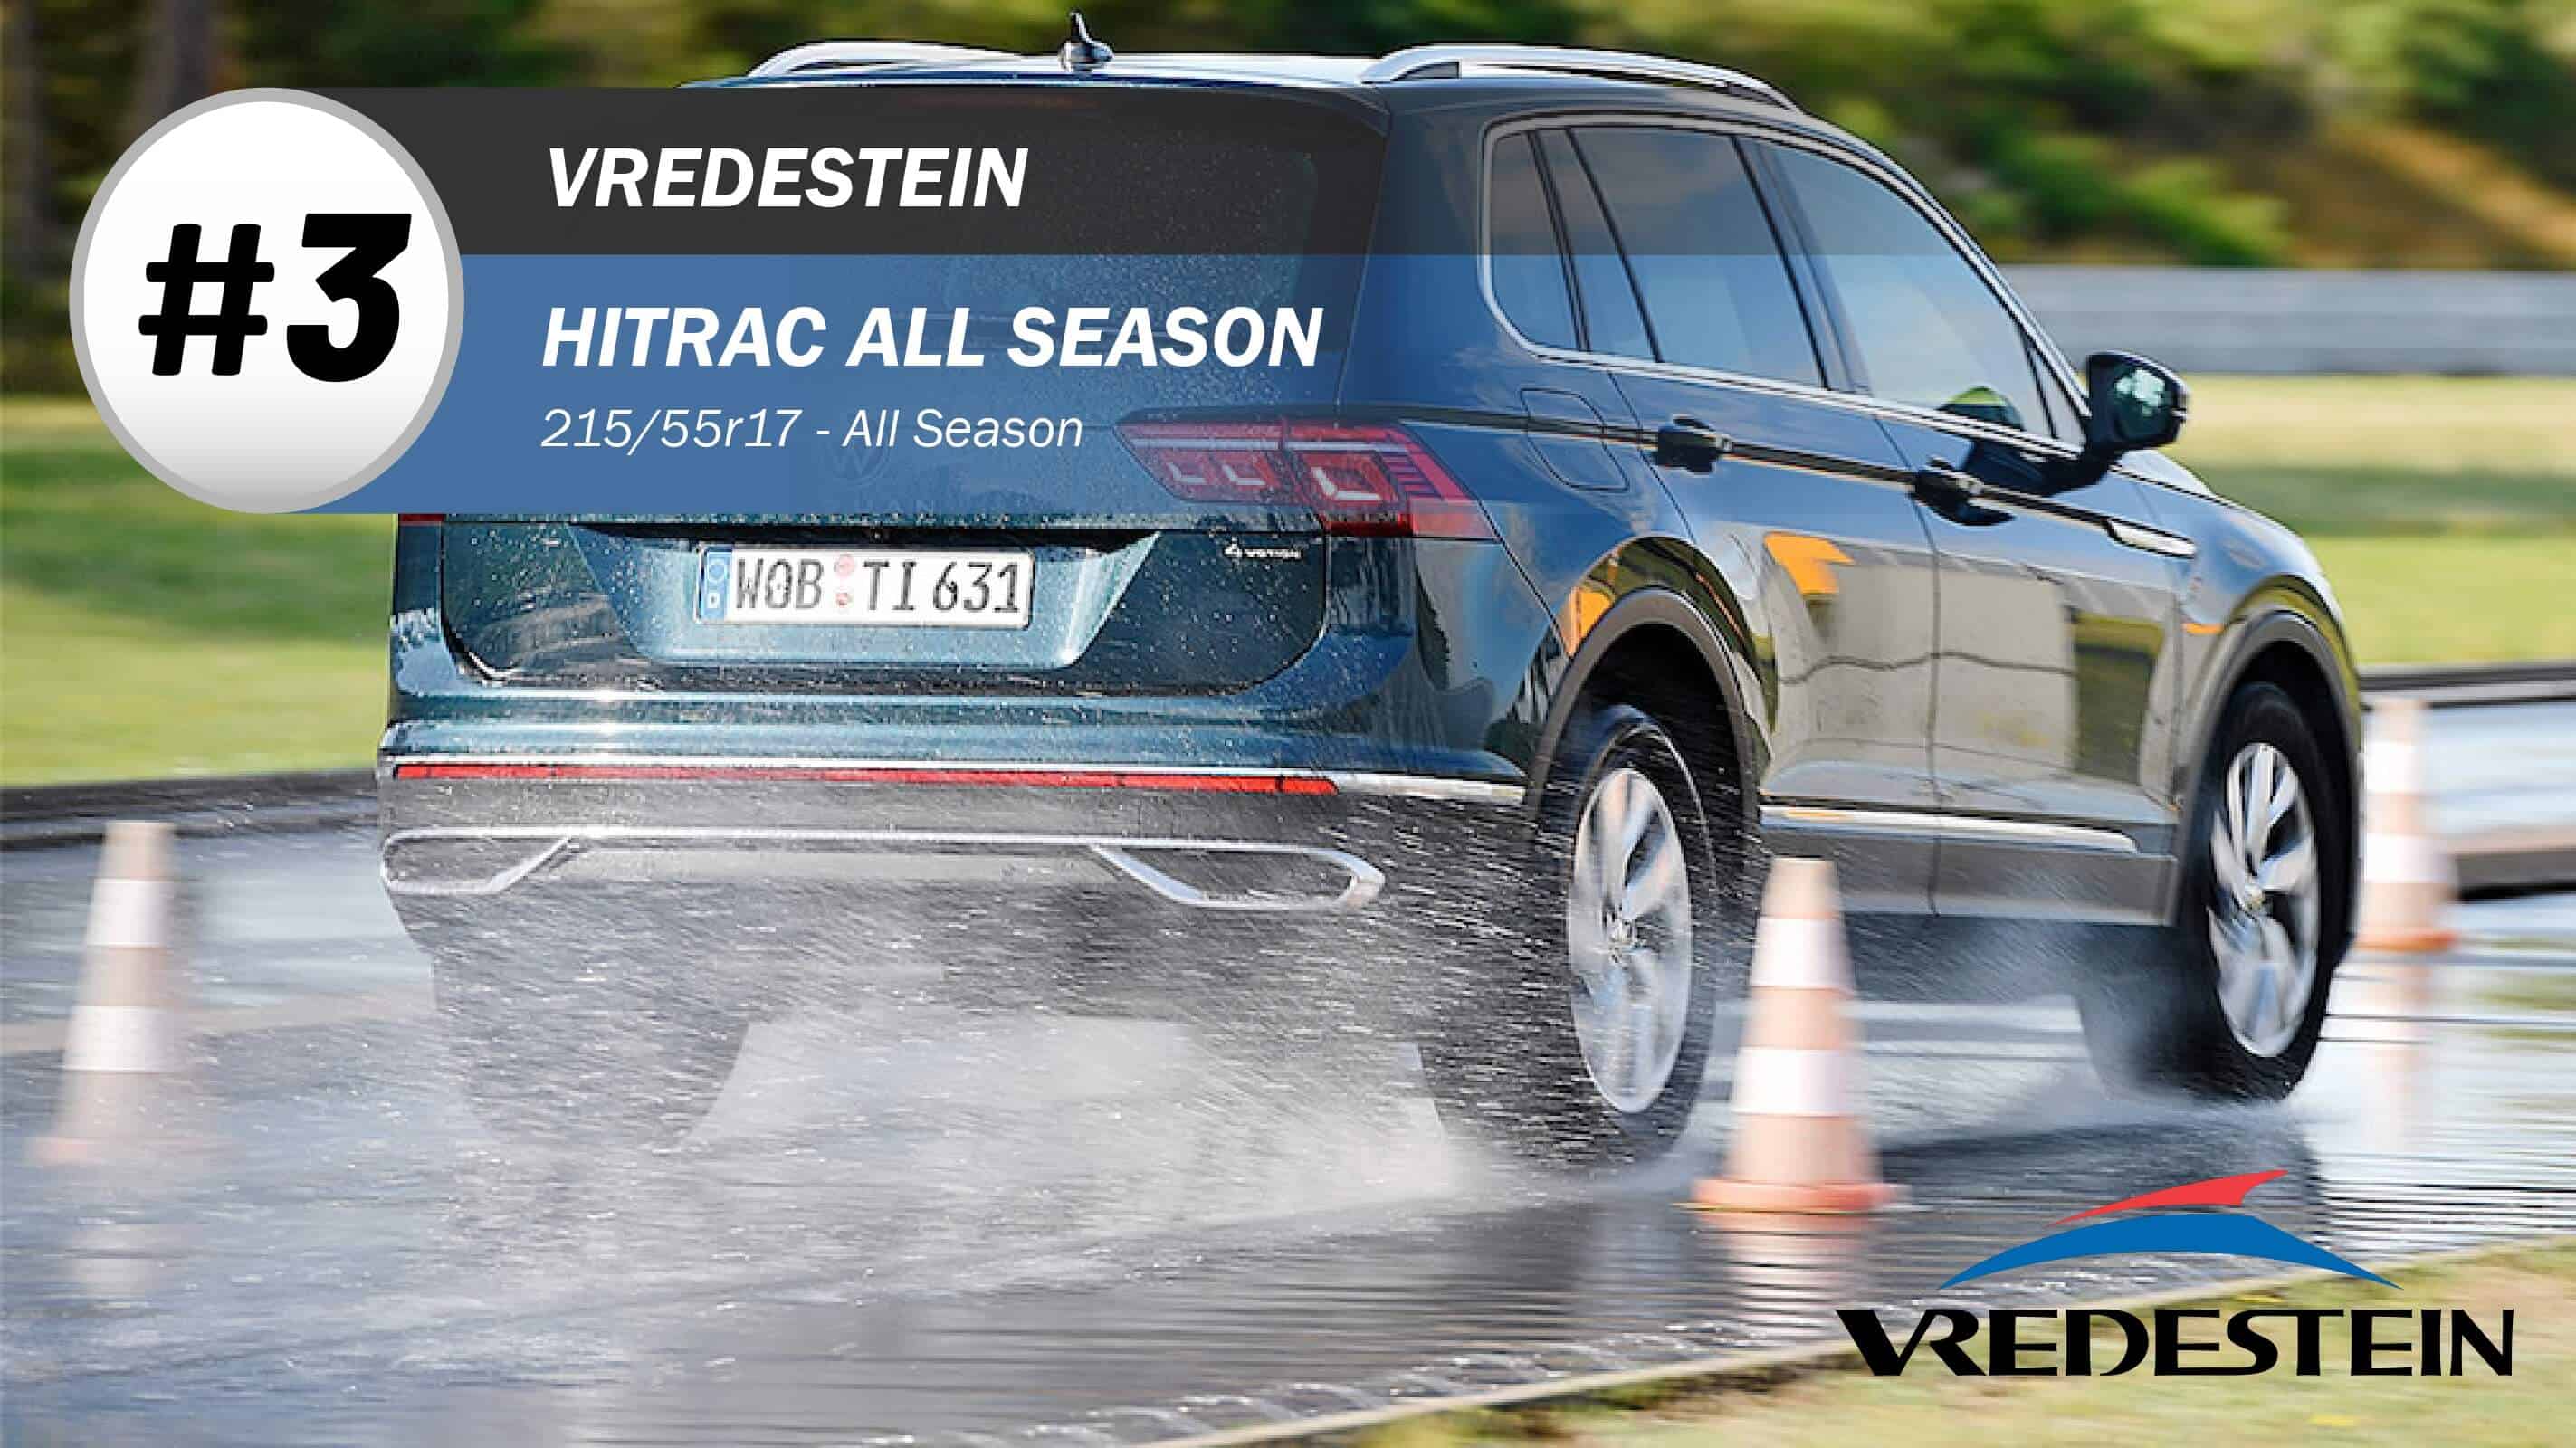 Top #3 All Season Tires: Vredestein Hitrac All Season – 215/55r17